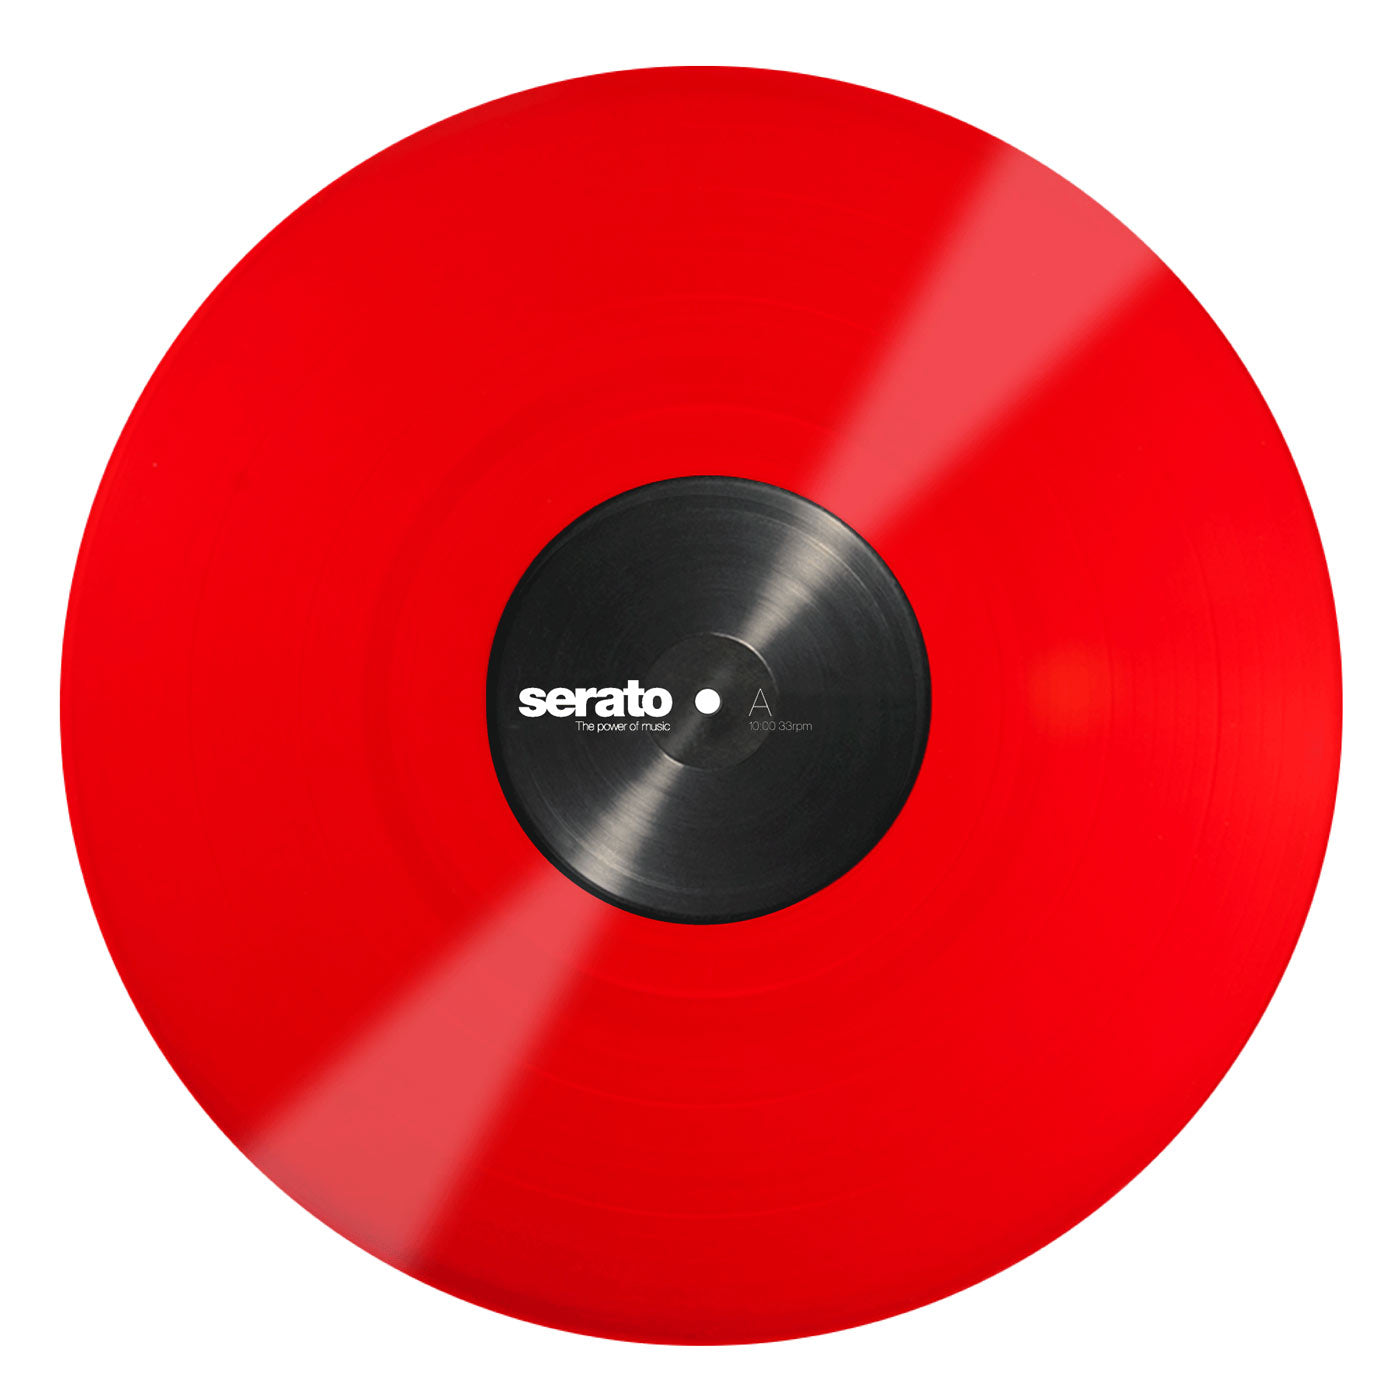 SERATO Performance Series Vinyl Pair - Red